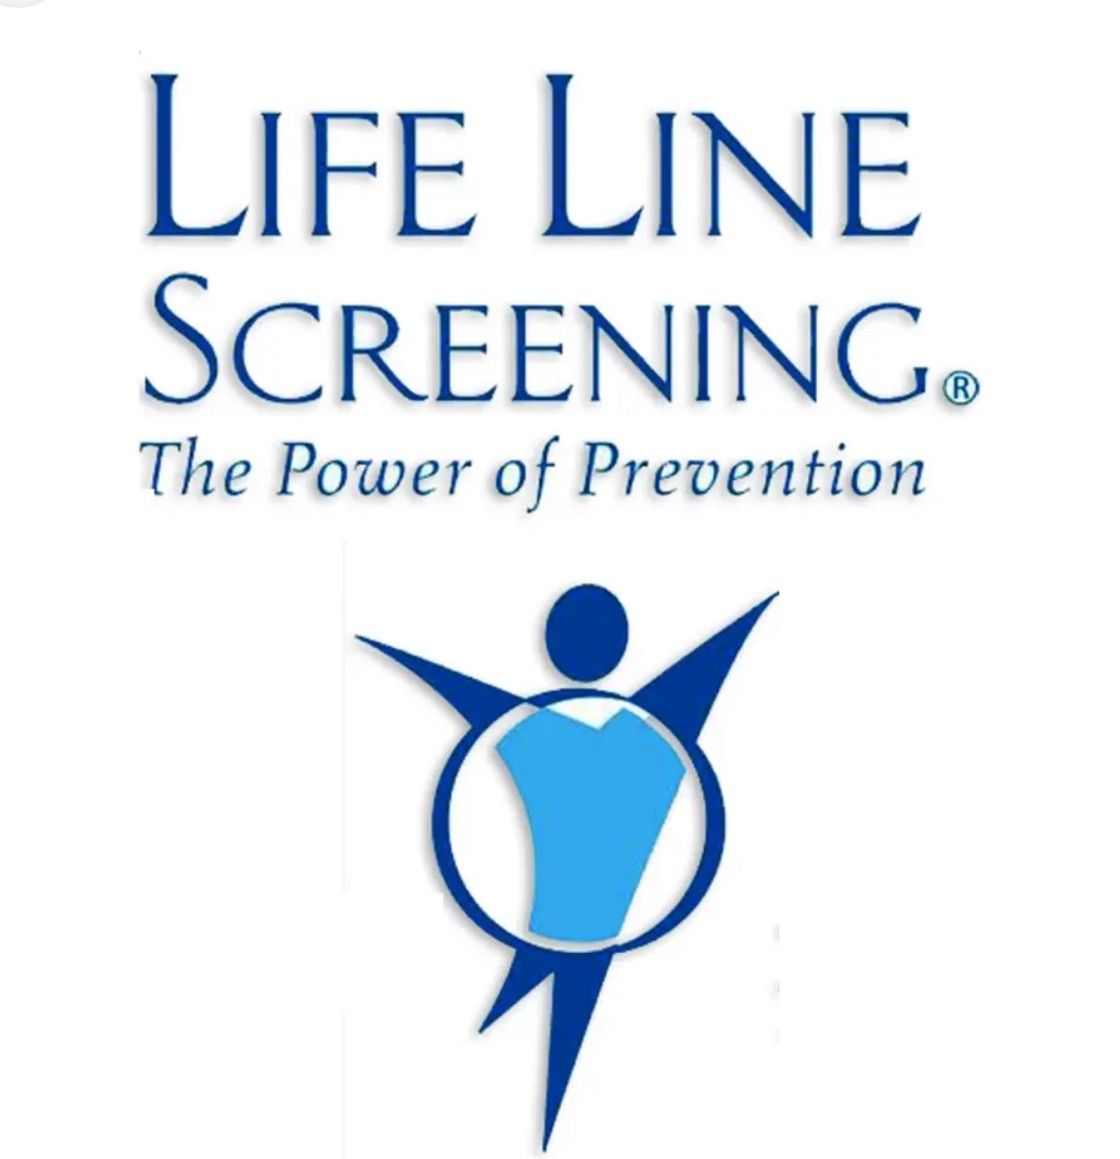 Lifeline Screening 